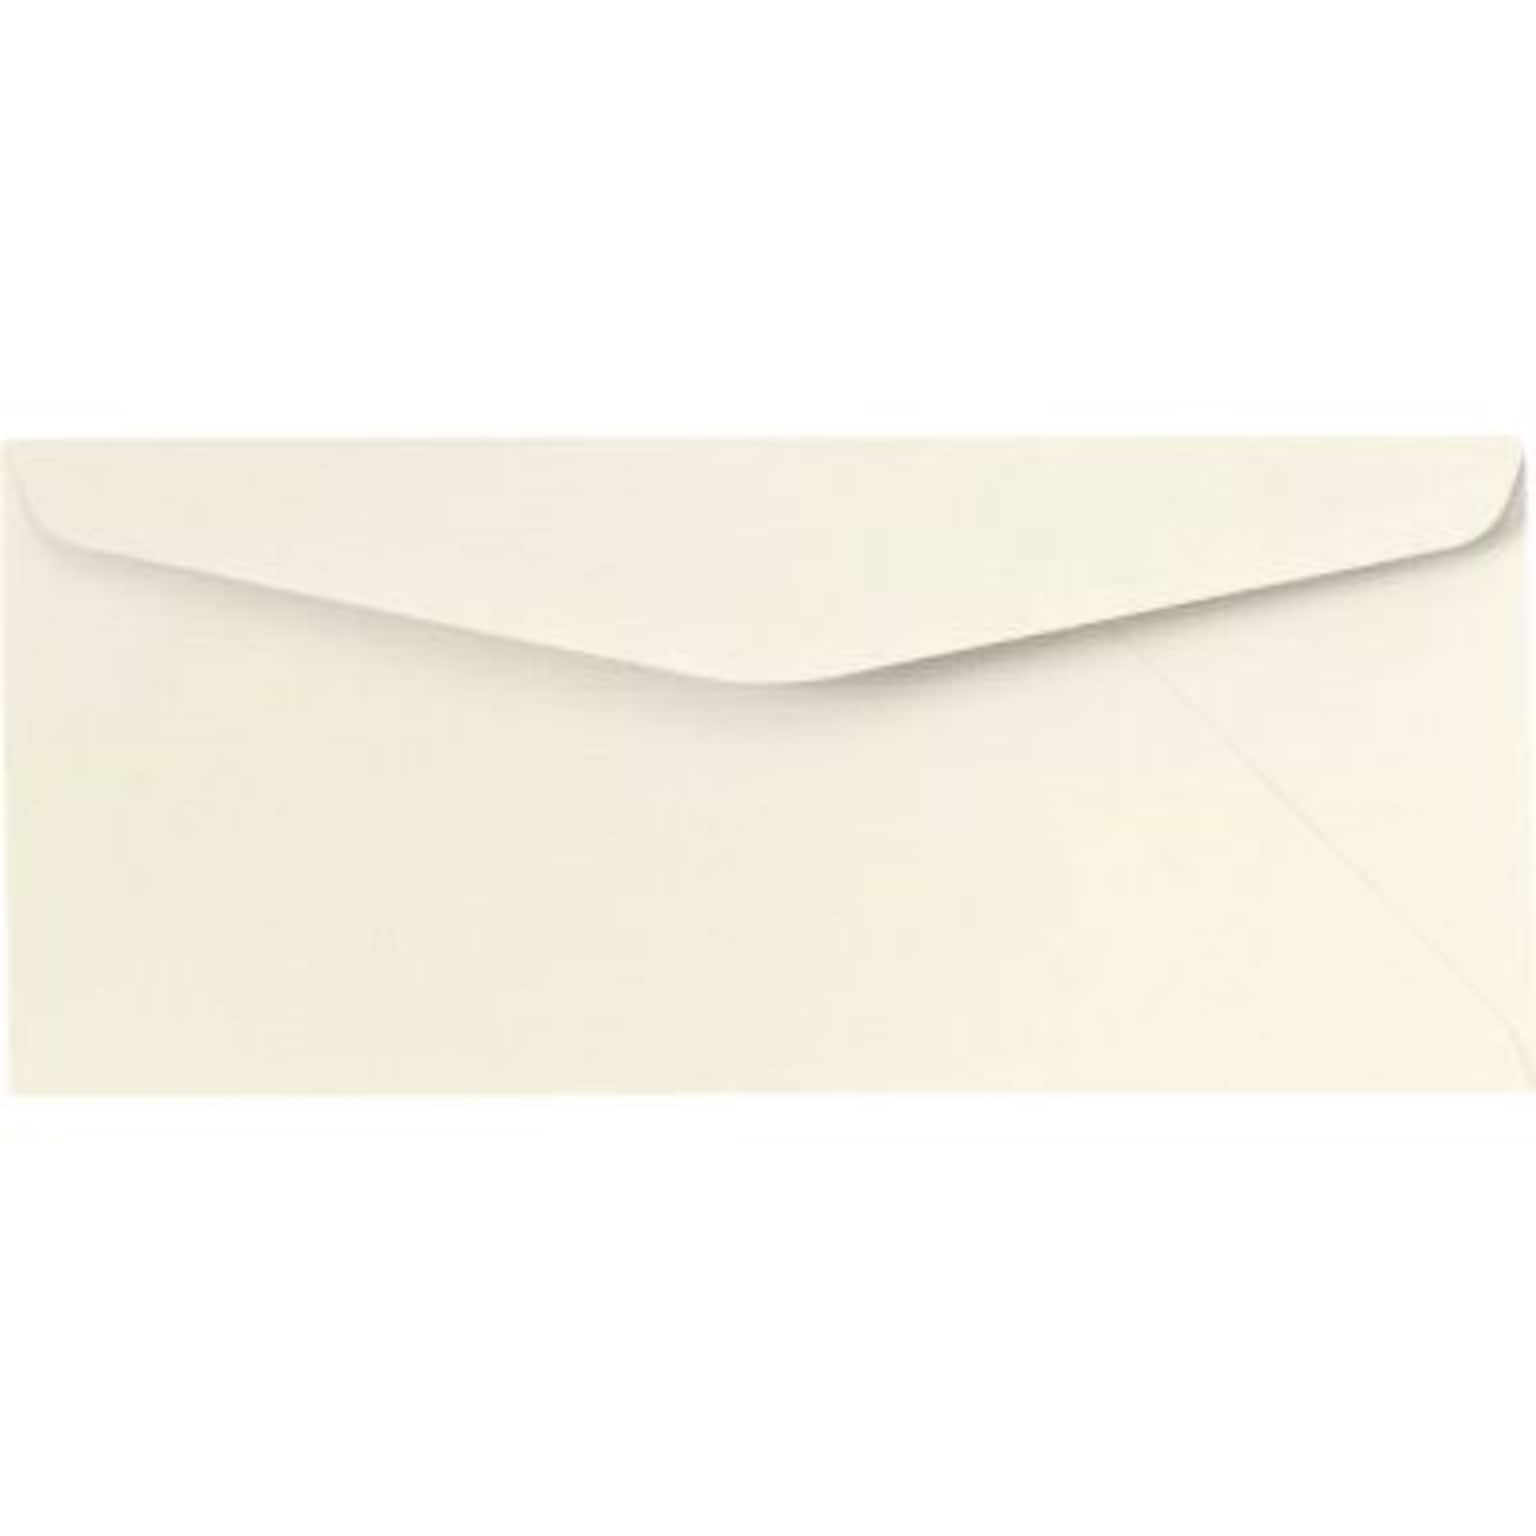 LUX #10 Booklet Envelope, 4 1/2 x 9 1/2, Natural Linen, 250/Pack (WS-2961-250)